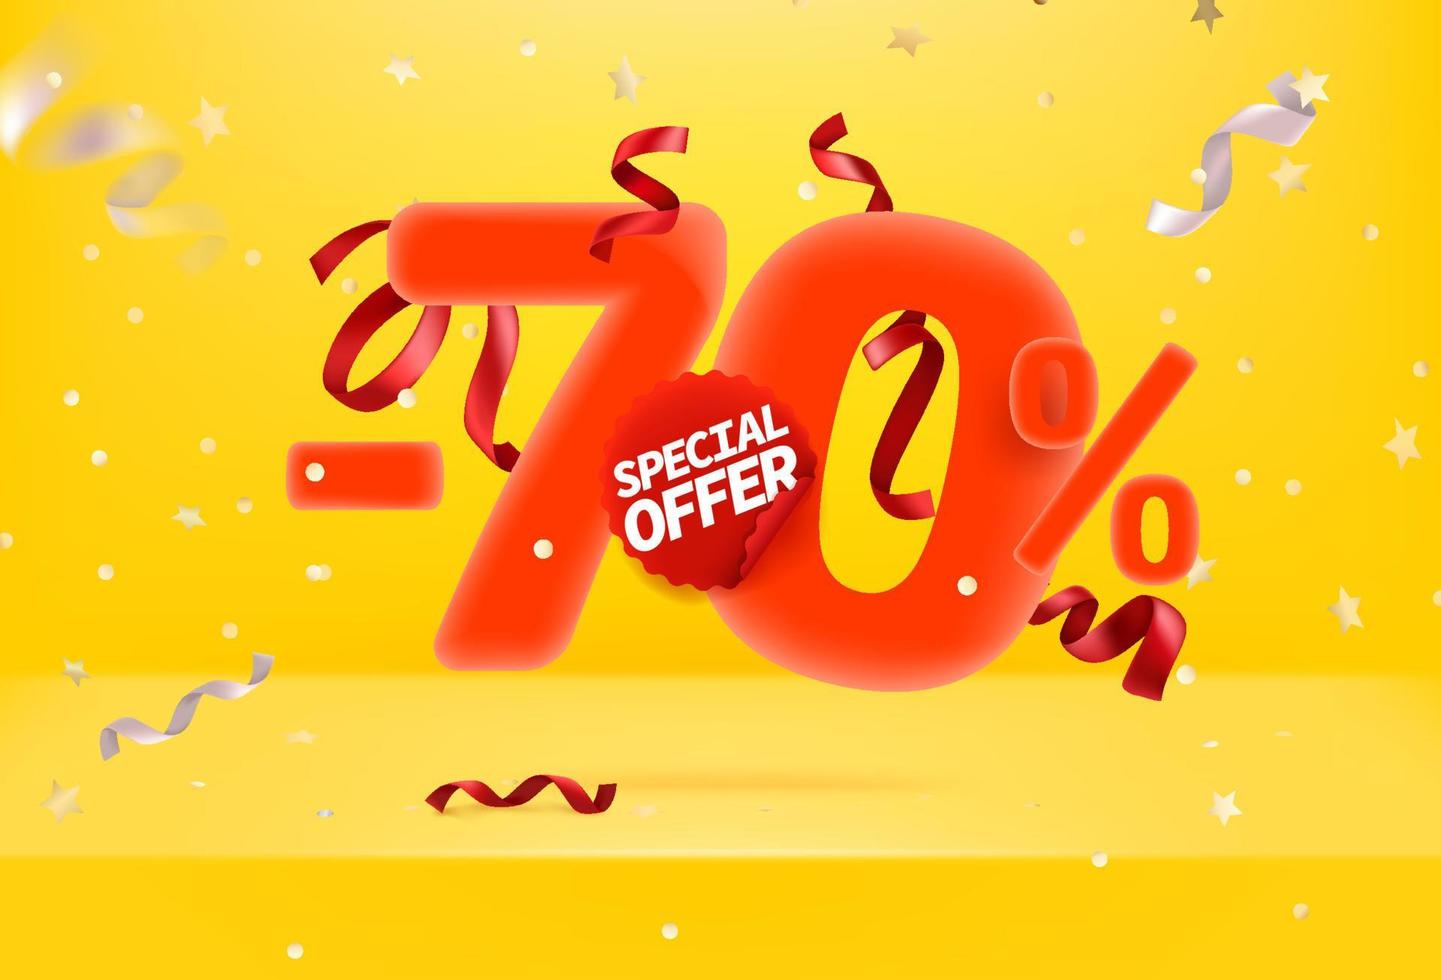 Seventy percent sale off special offer vector promo banner